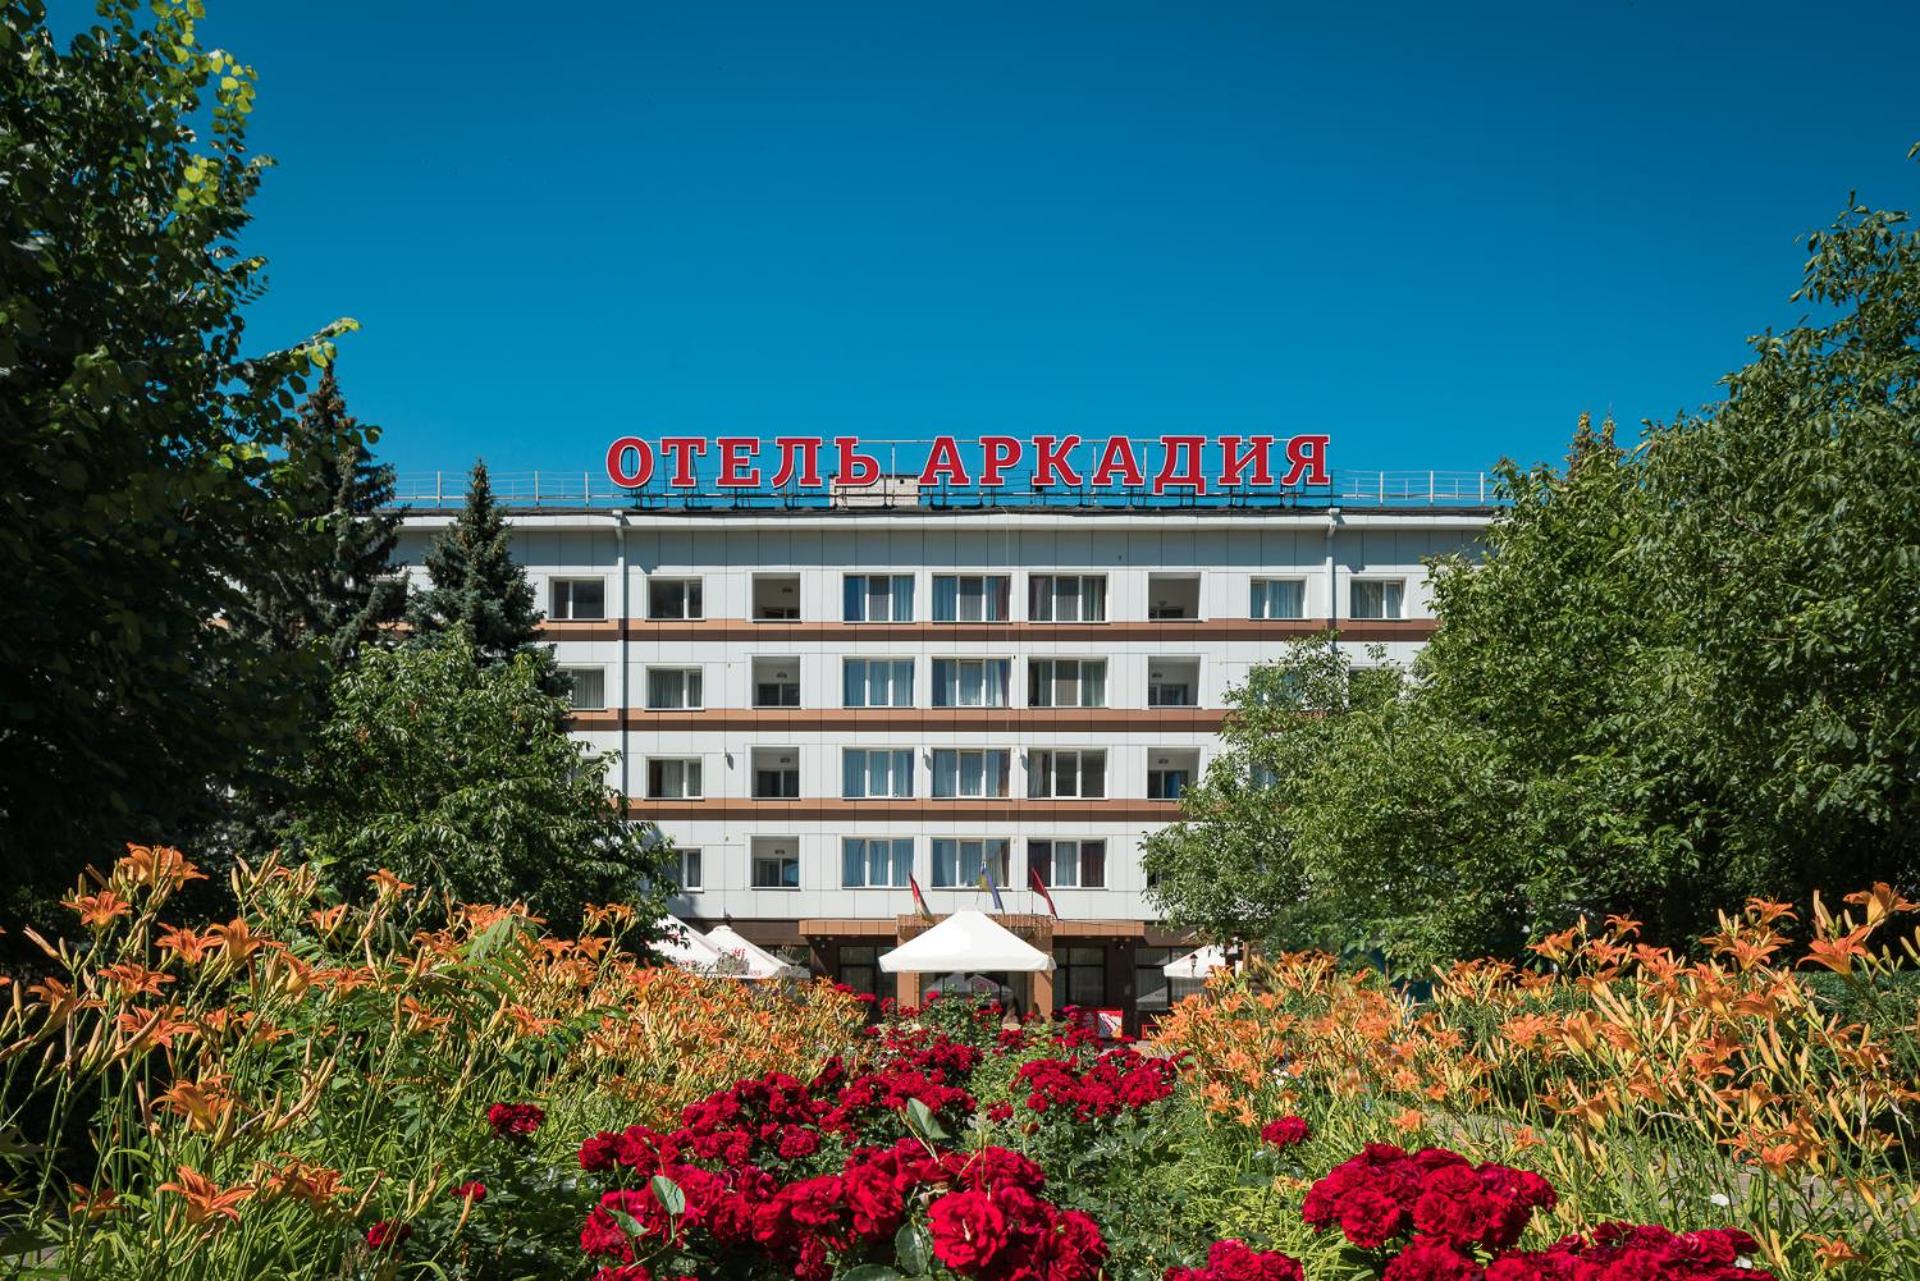 Hotel Arcadia